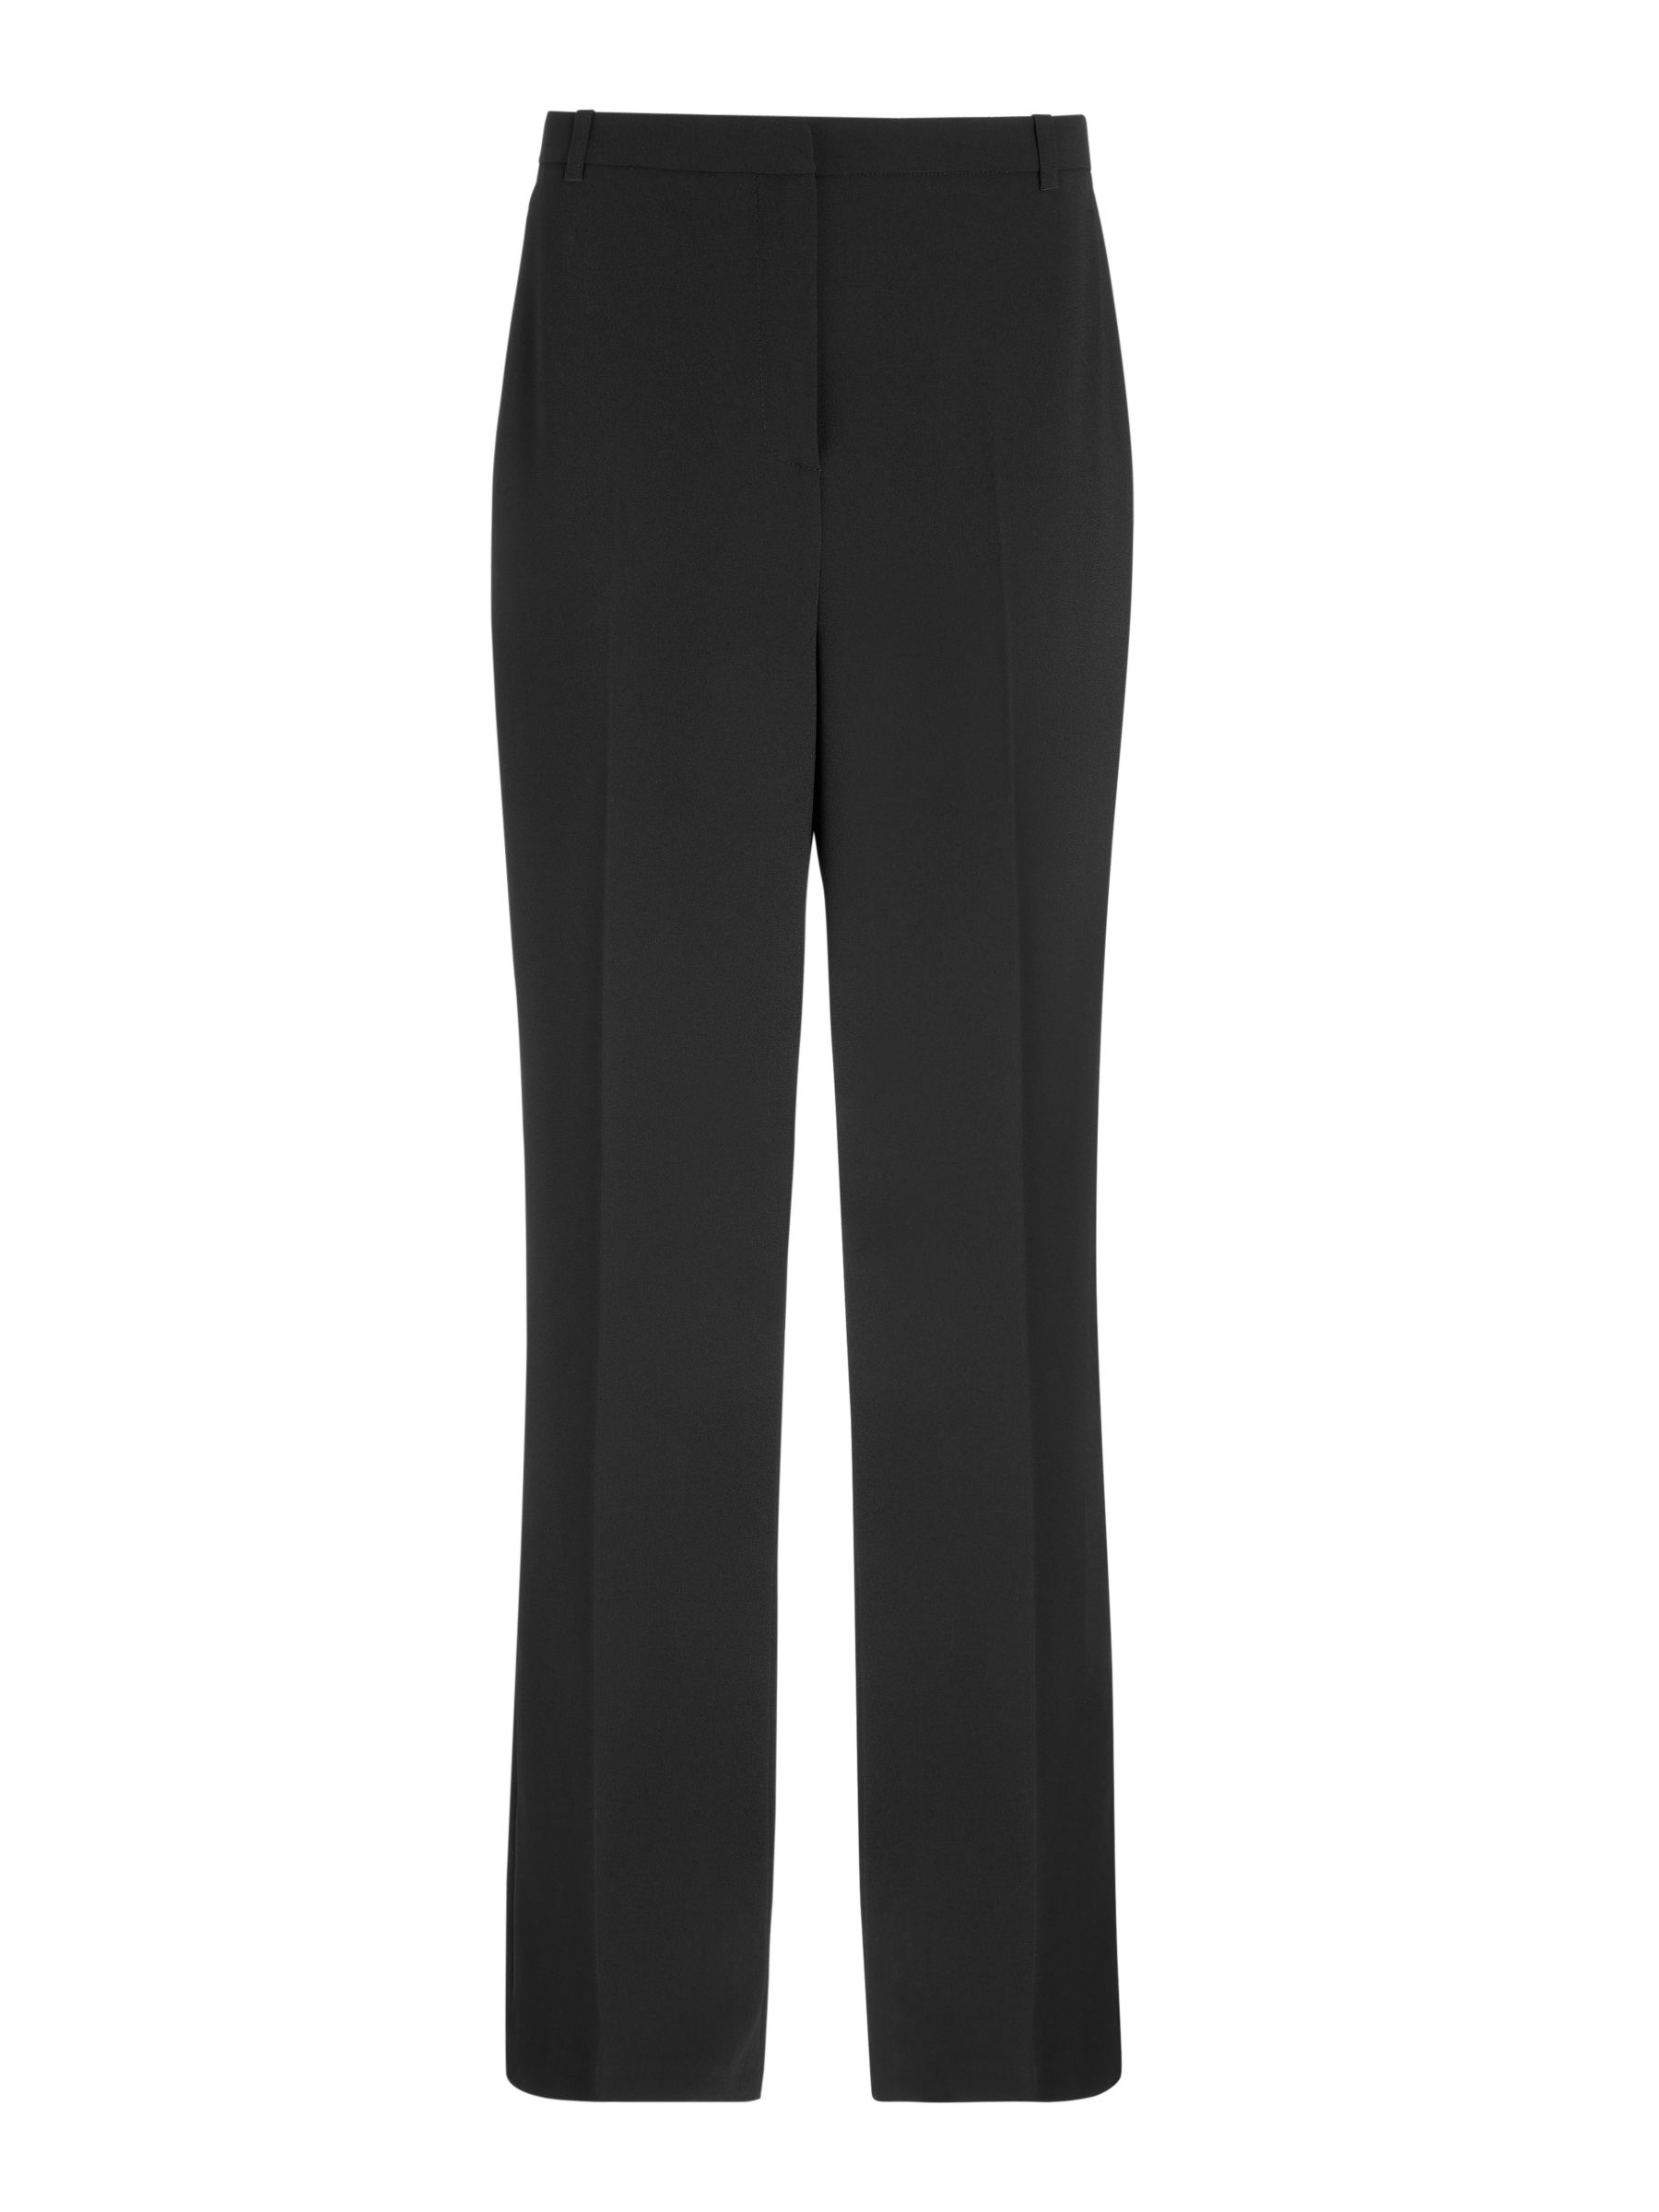 John Lewis & Partners Tailored Trousers, Black at John Lewis & Partners